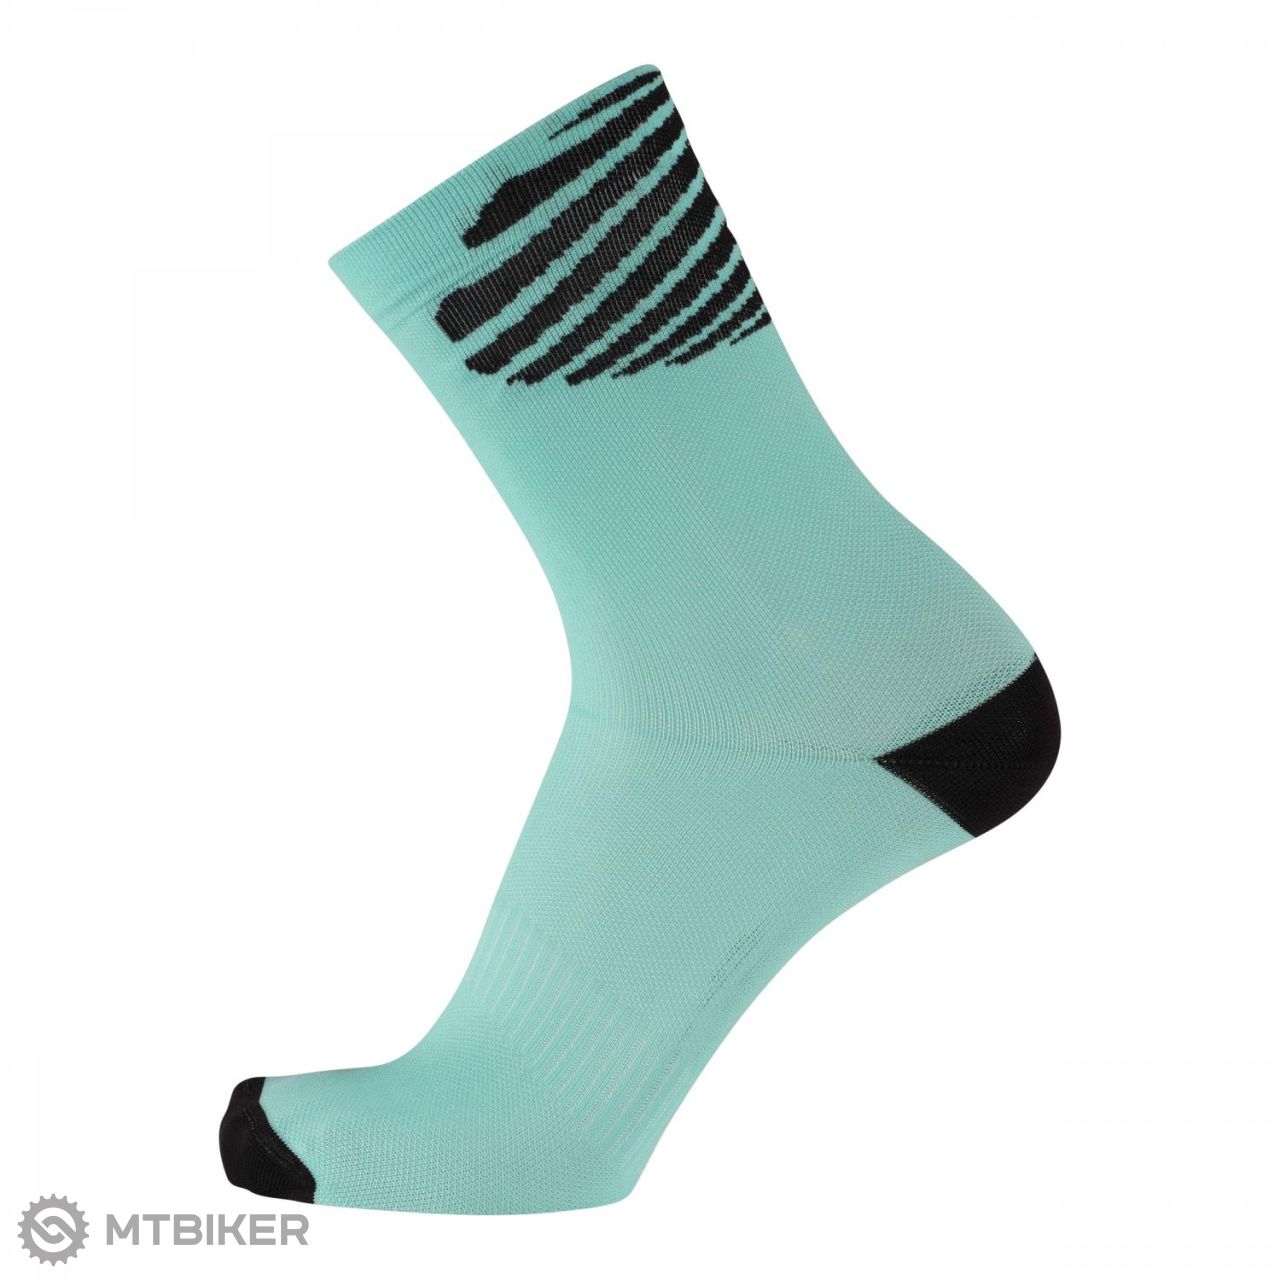 Nalini Topeka Socks, Black/Turquoise